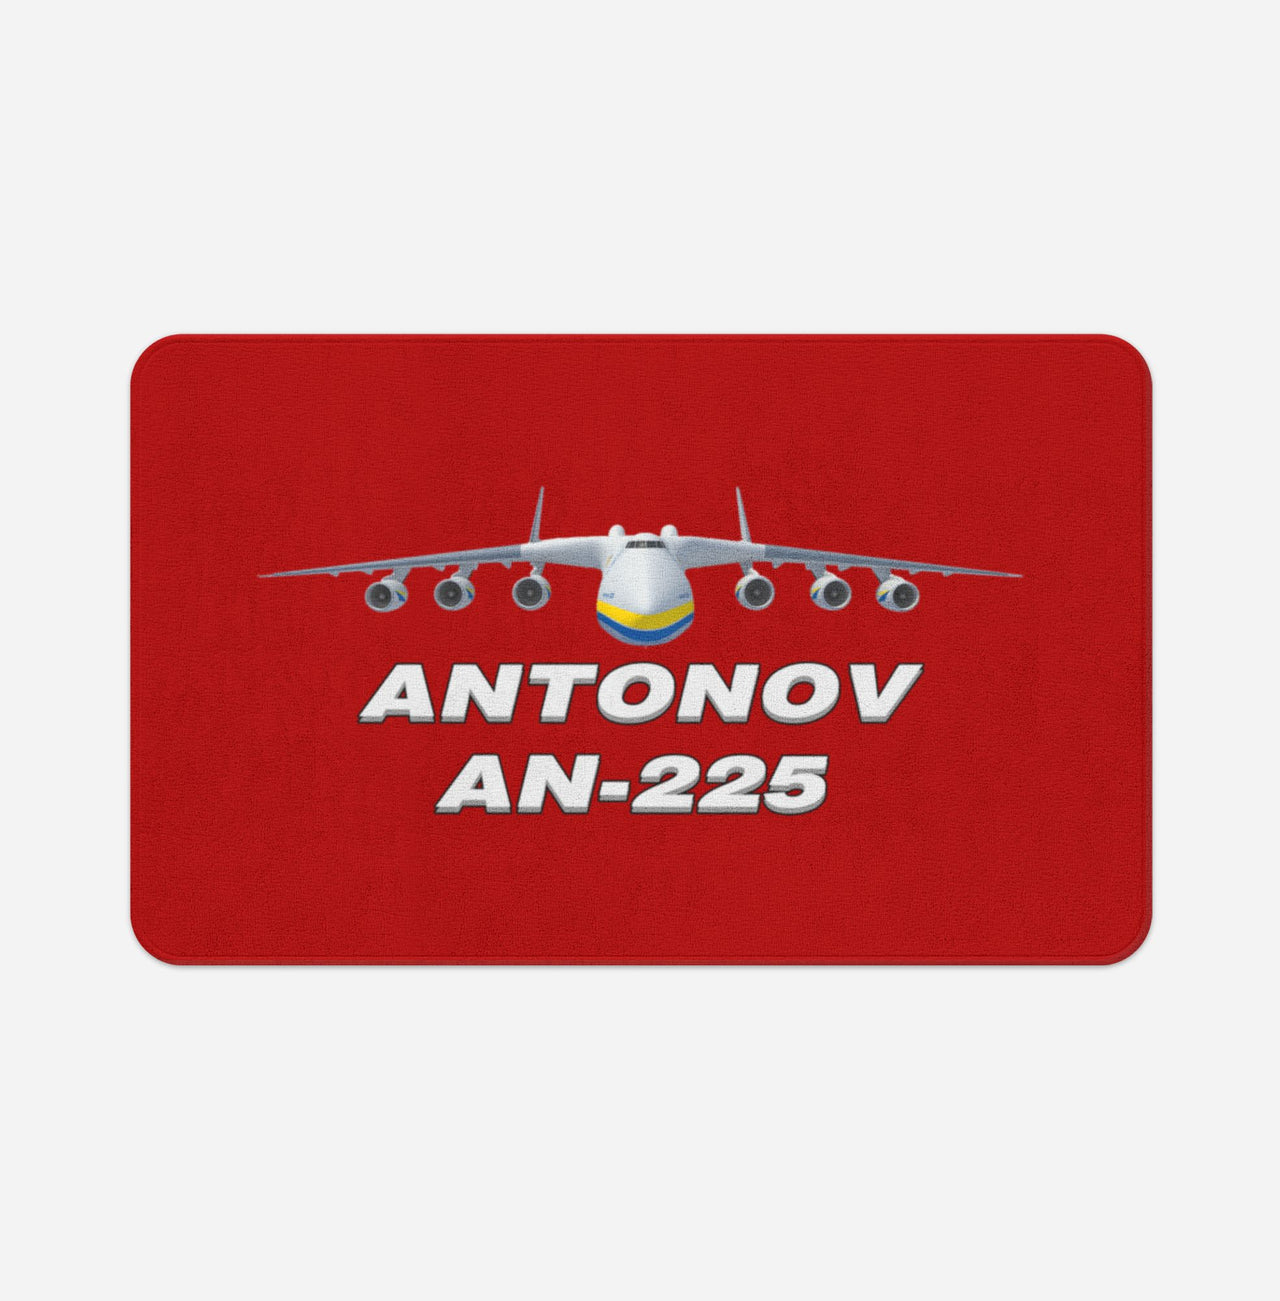 Antonov AN-225 (16) Designed Bath Mats